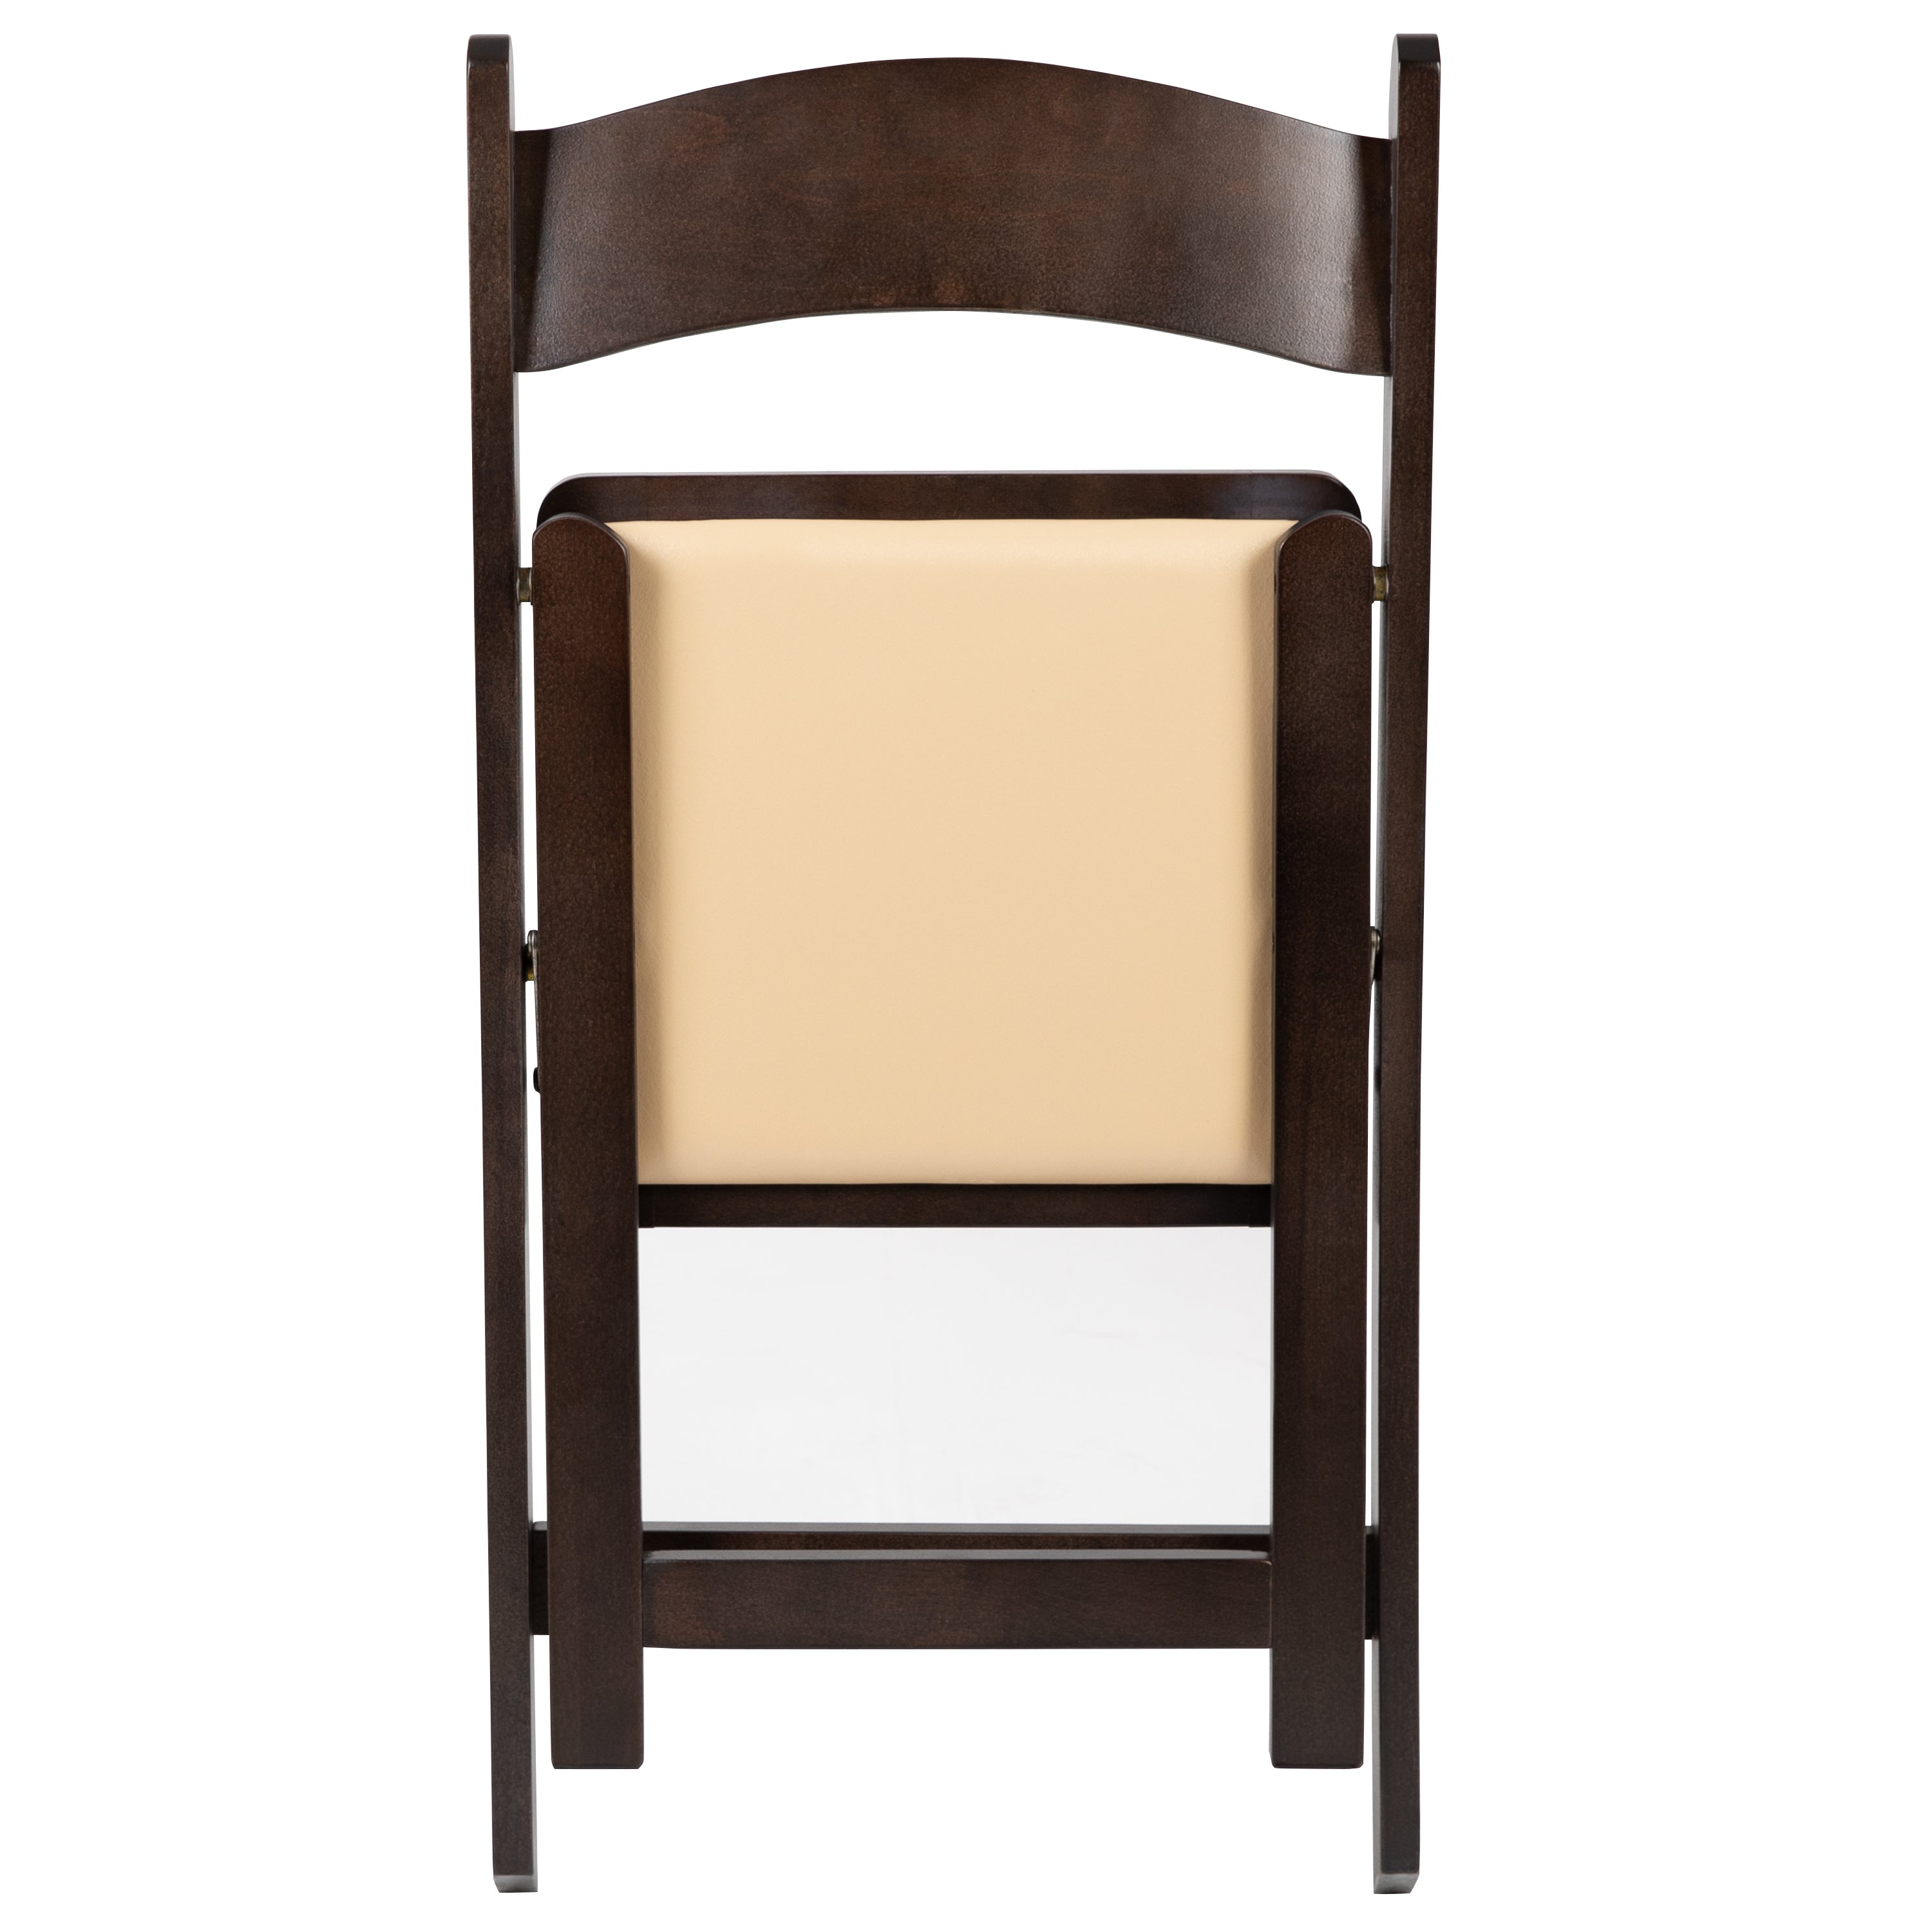 HERCULES Series Wood Folding Chair with Vinyl Padded Seat-Folding Chair-Flash Furniture-Wall2Wall Furnishings